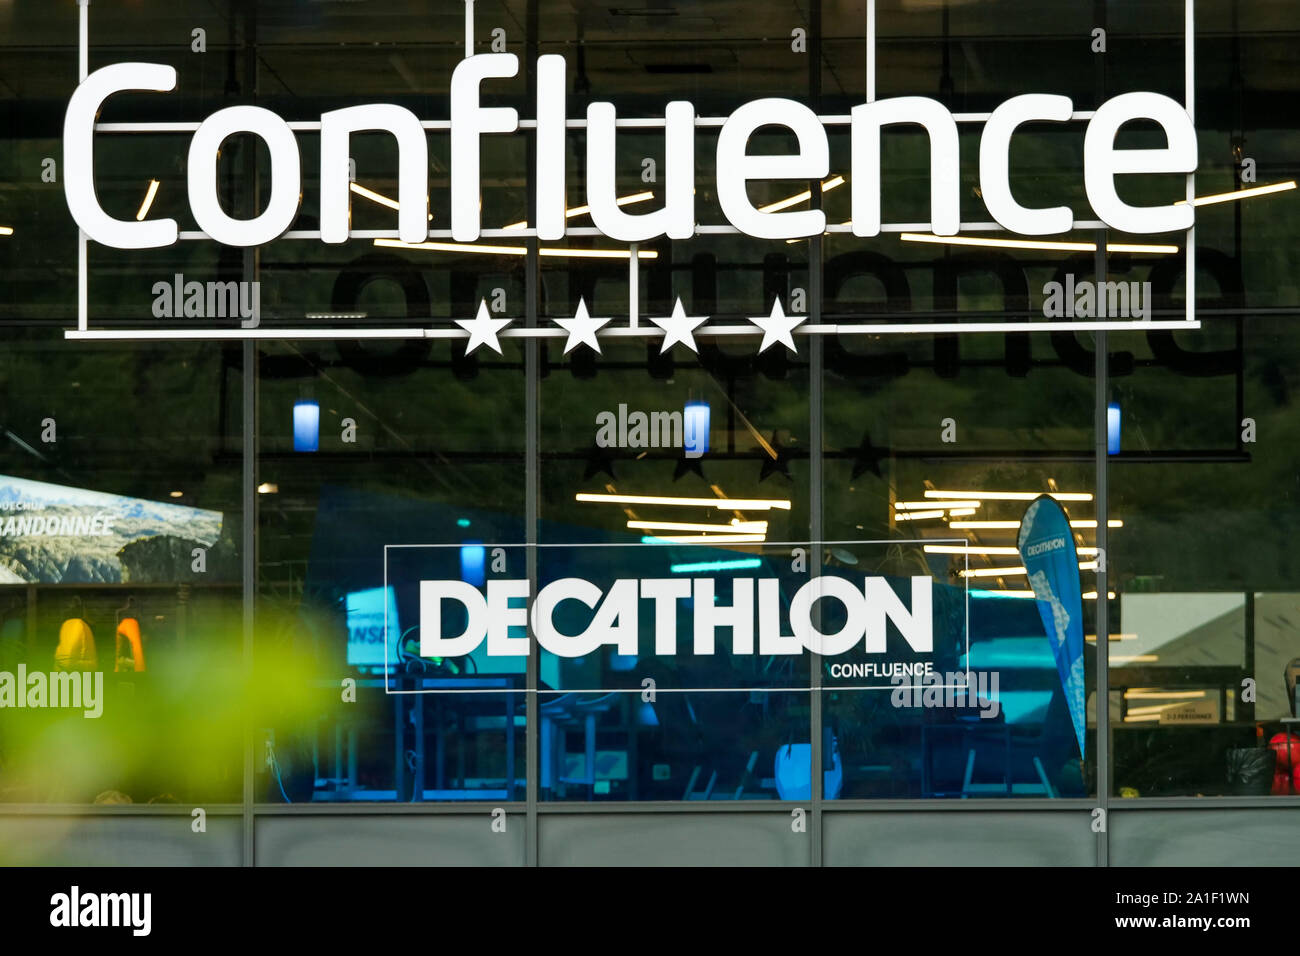 Decathlon company sign, Confluence 